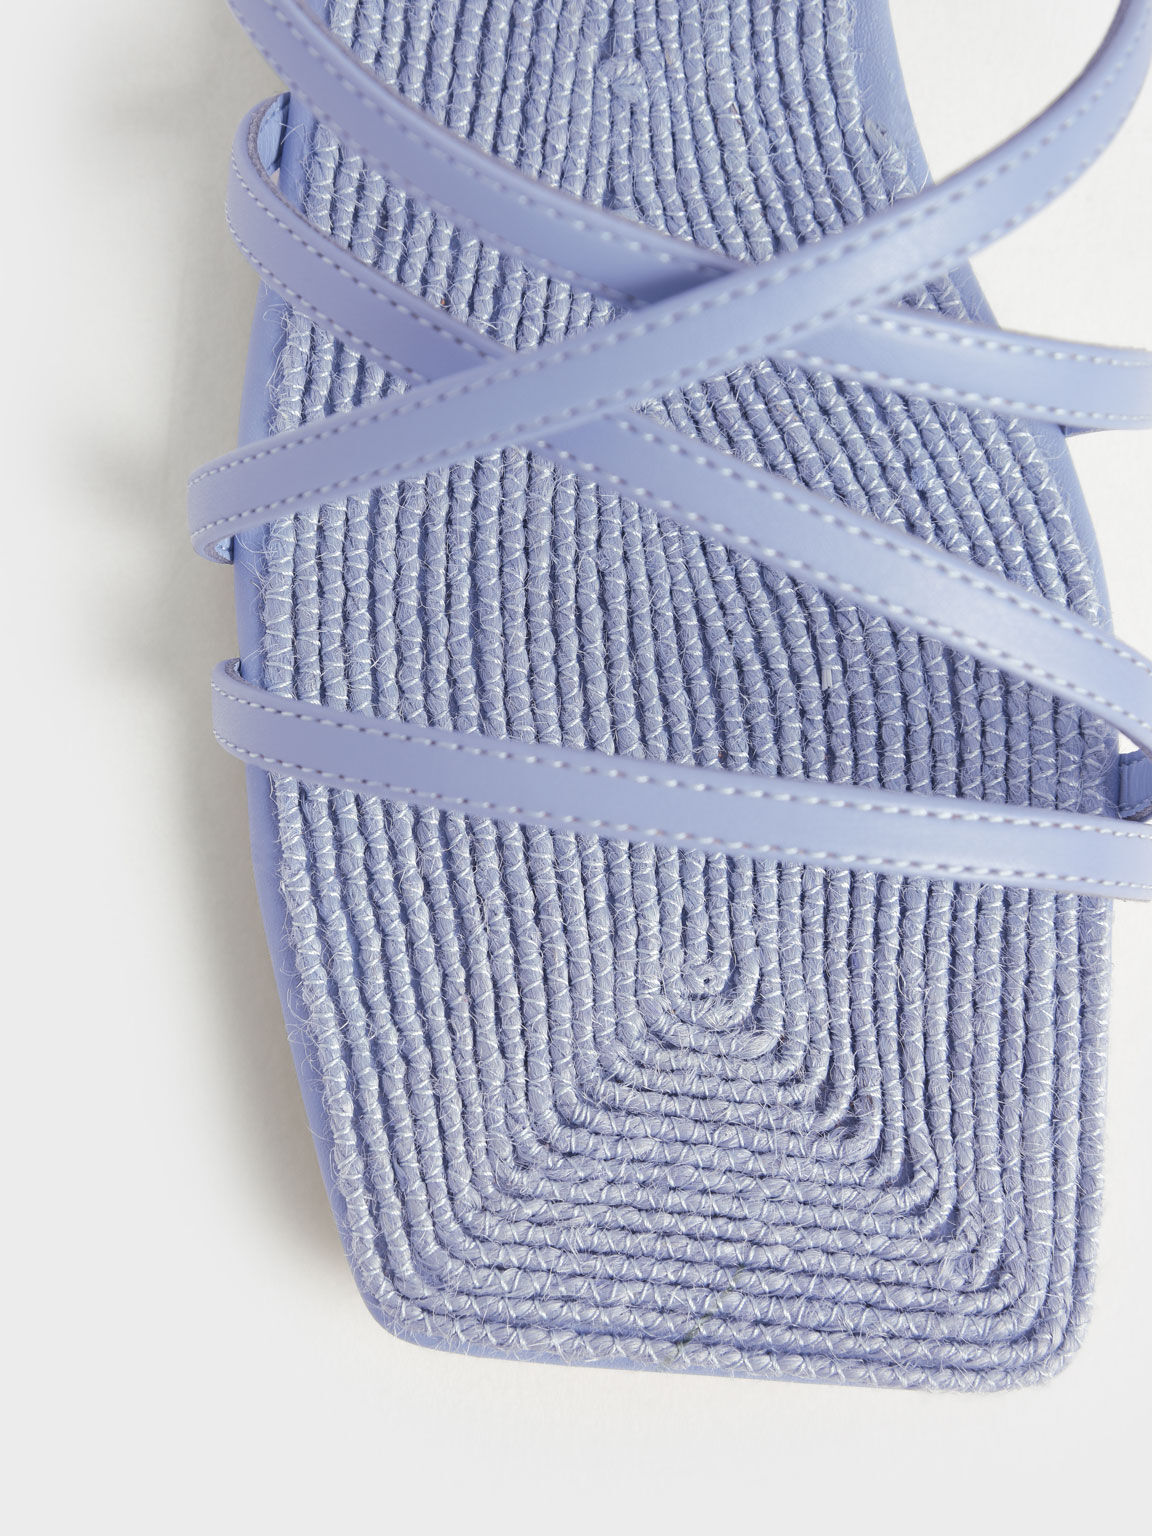 Strappy Square Toe Sandals, Blue, hi-res